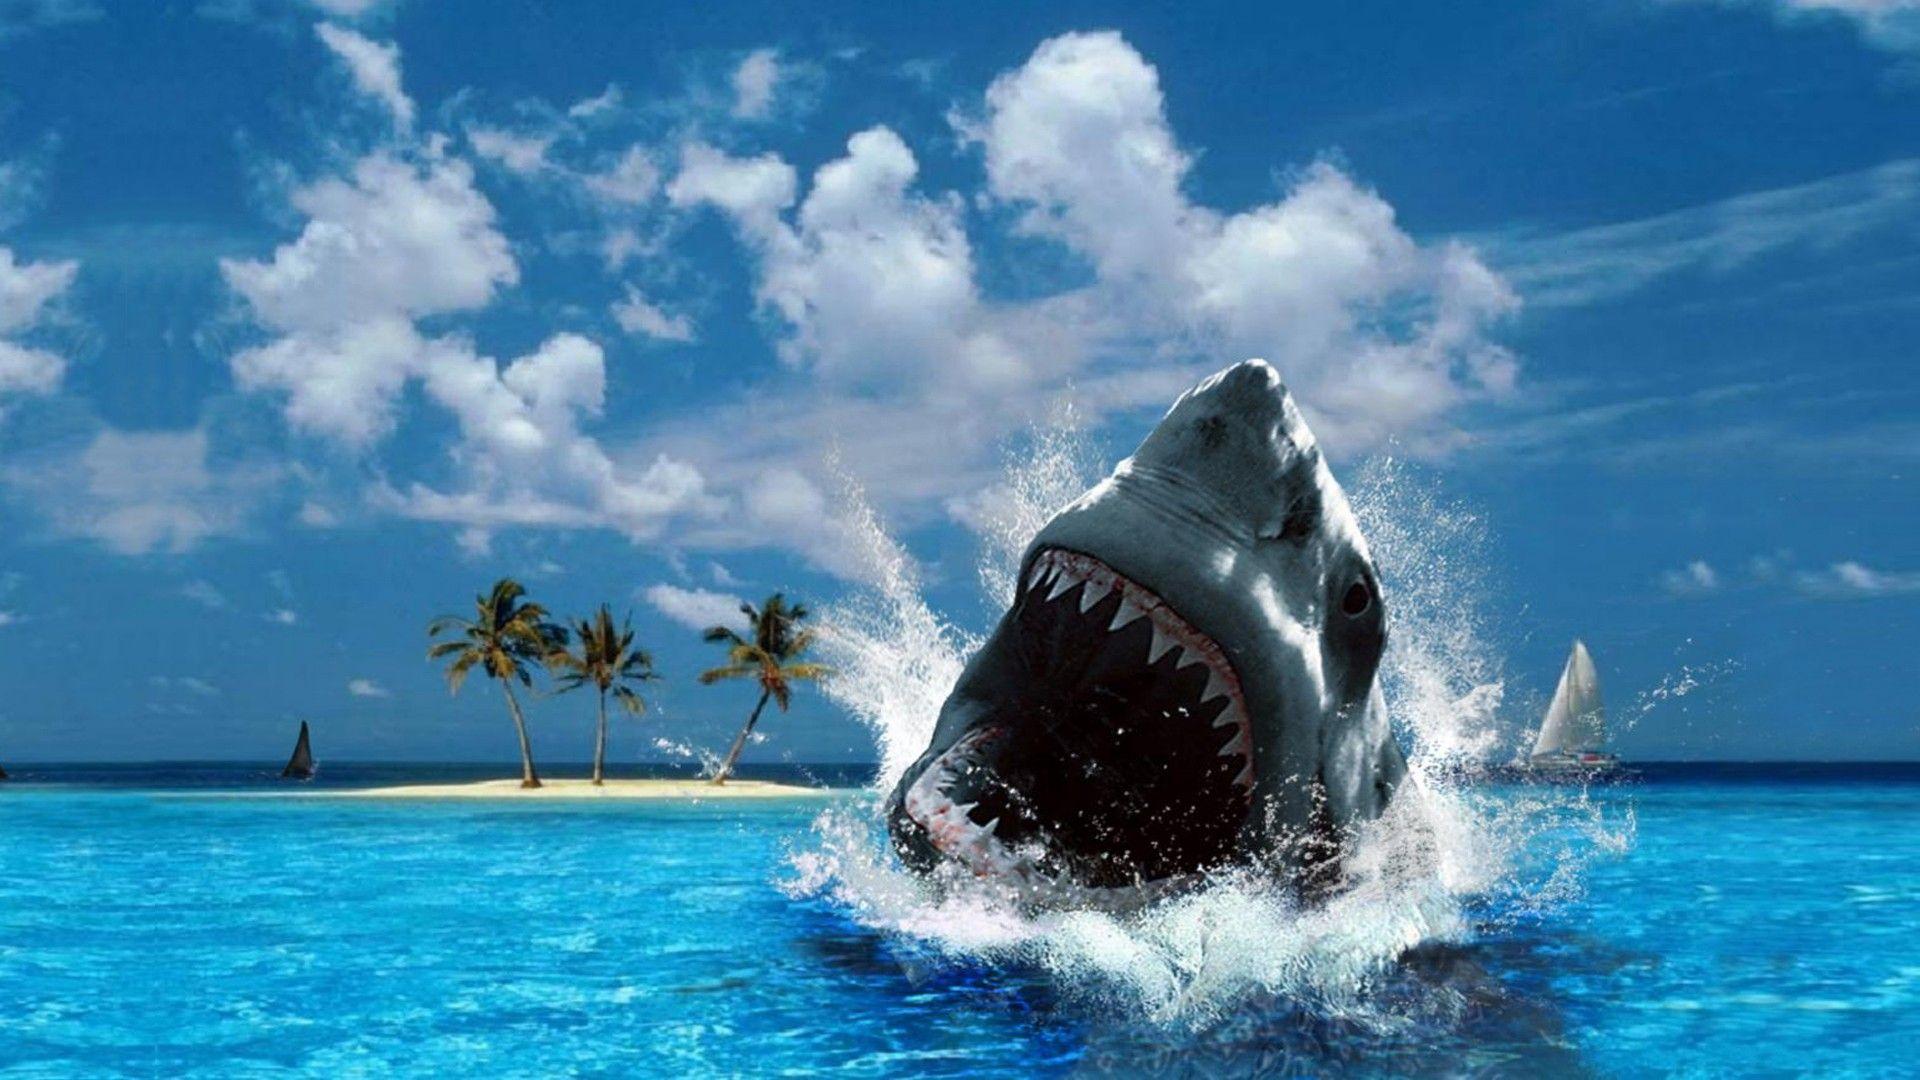 Shark Week Wallpaper, HD Creative Shark Week Pics, Full HD